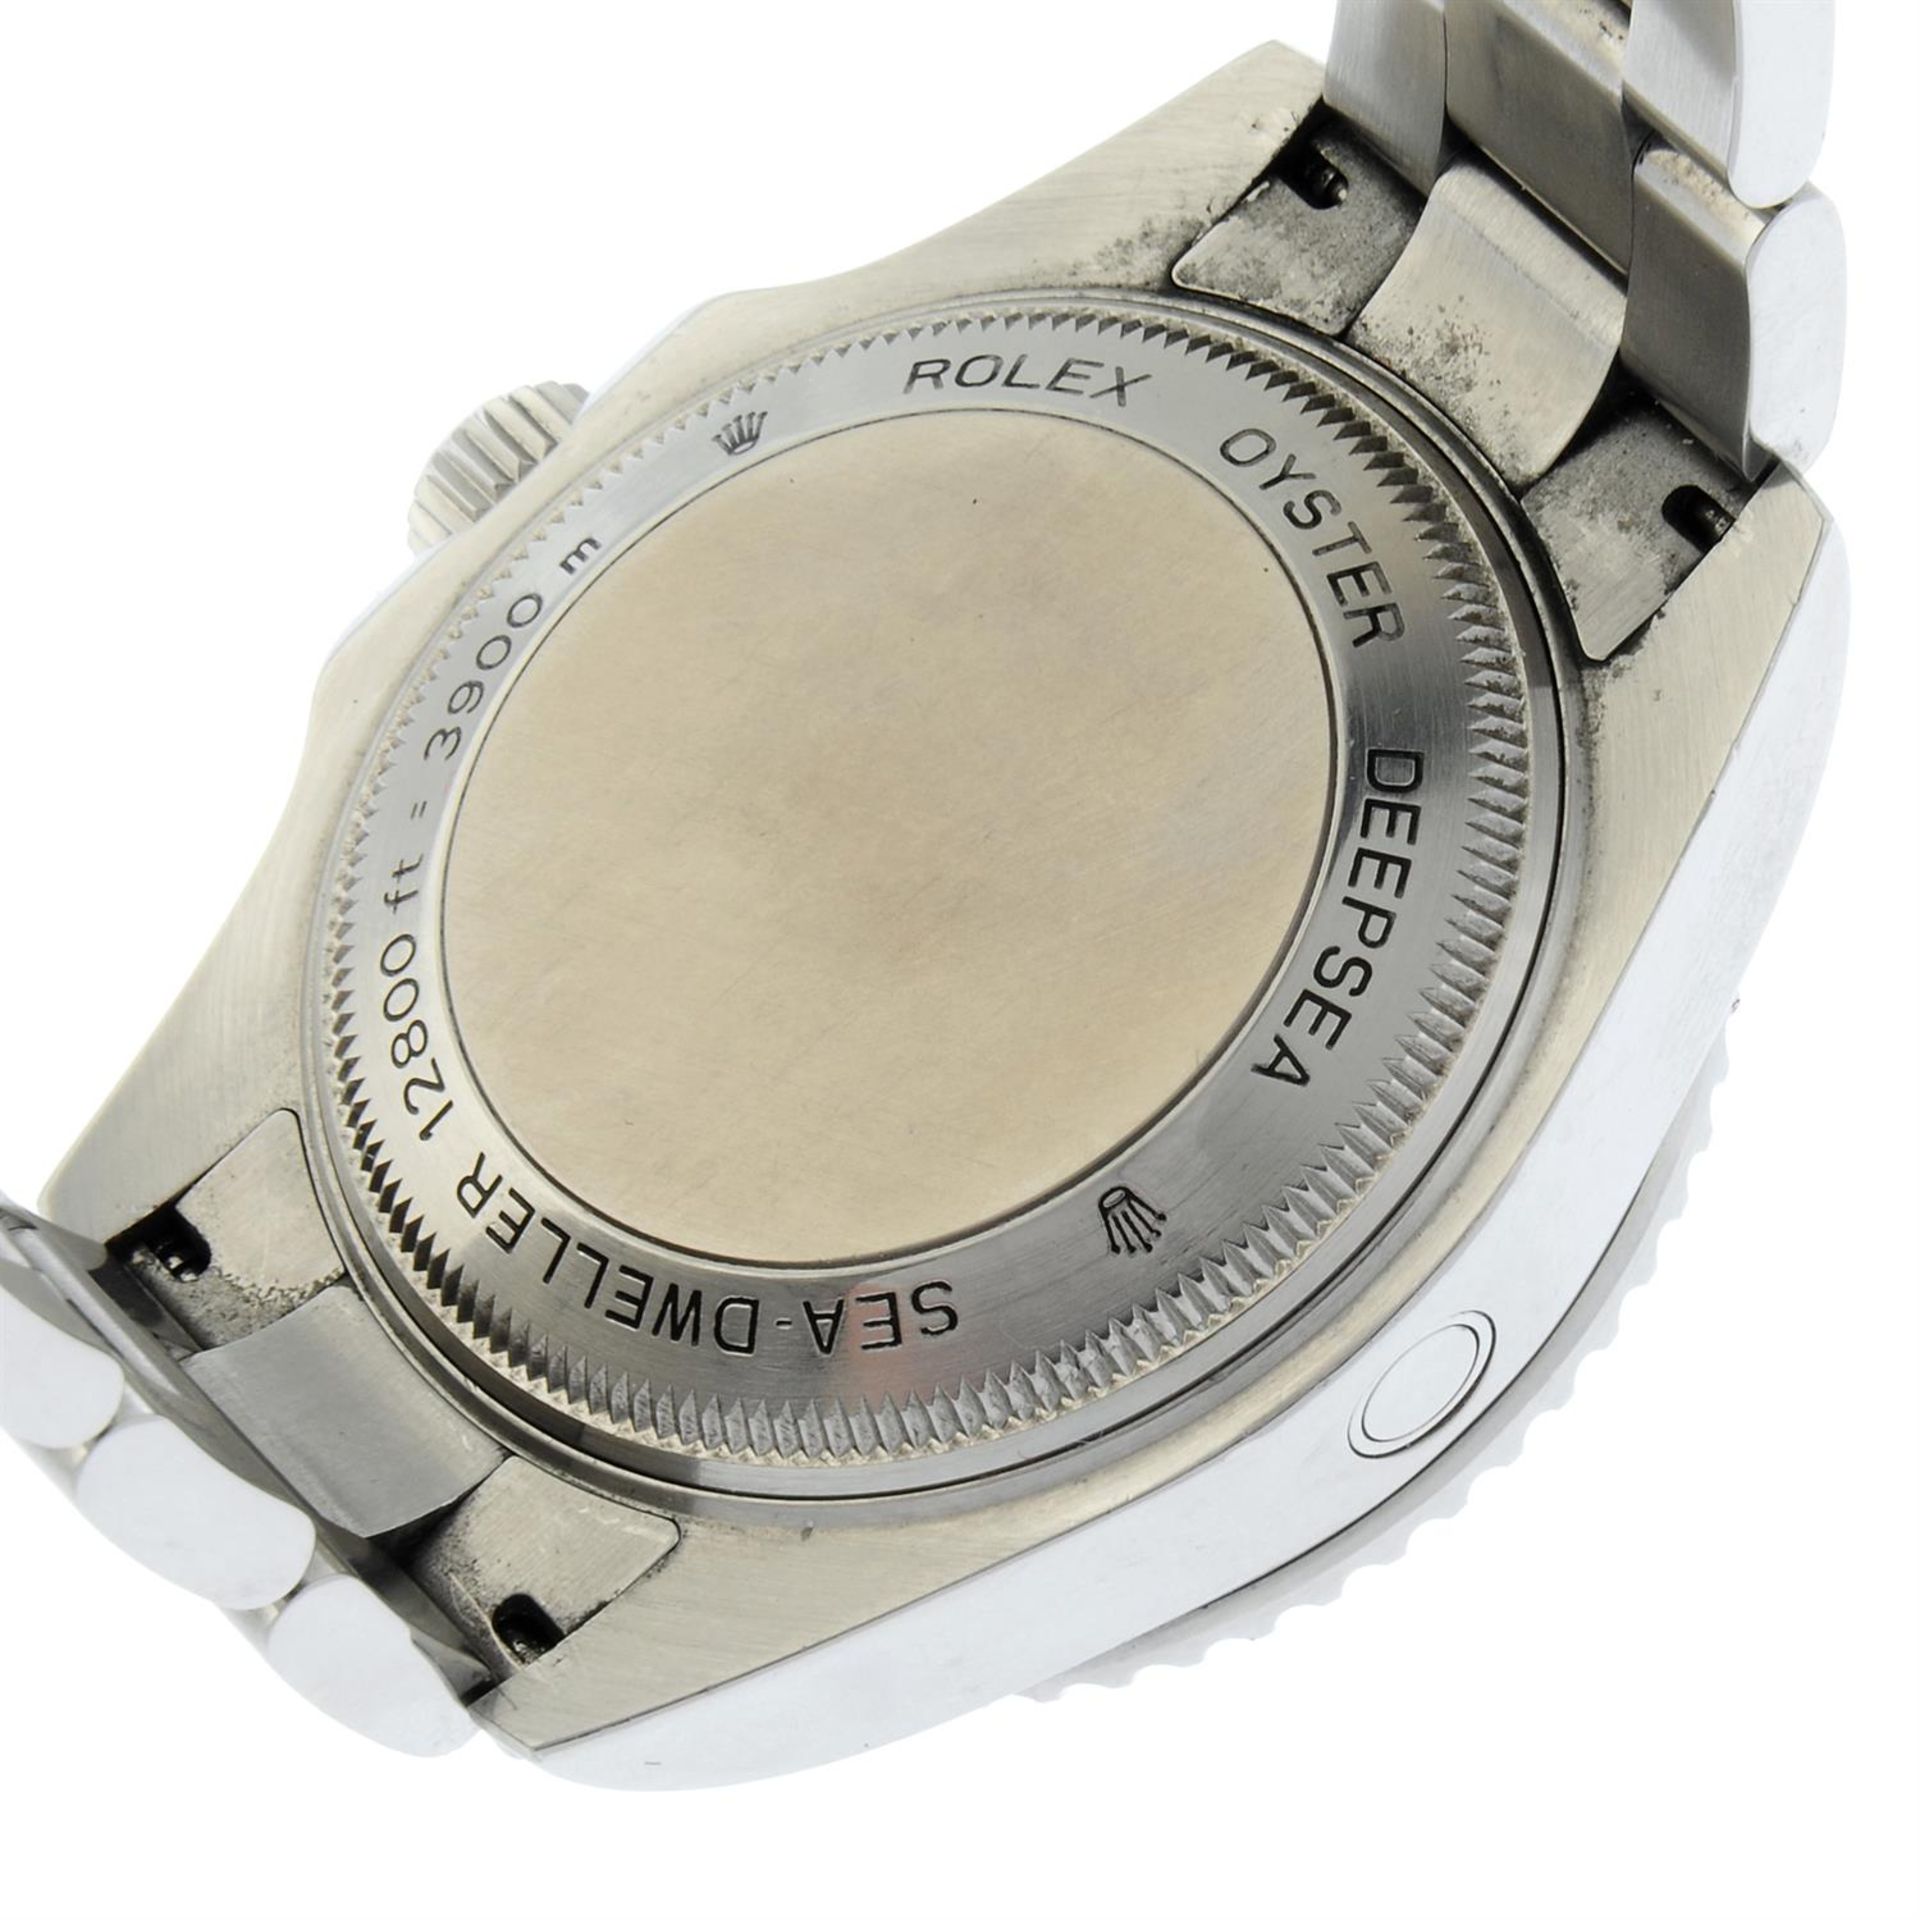 Rolex - an Oyster Perpetual Deepsea Sea-Dweller watch, 44mm. - Image 4 of 4